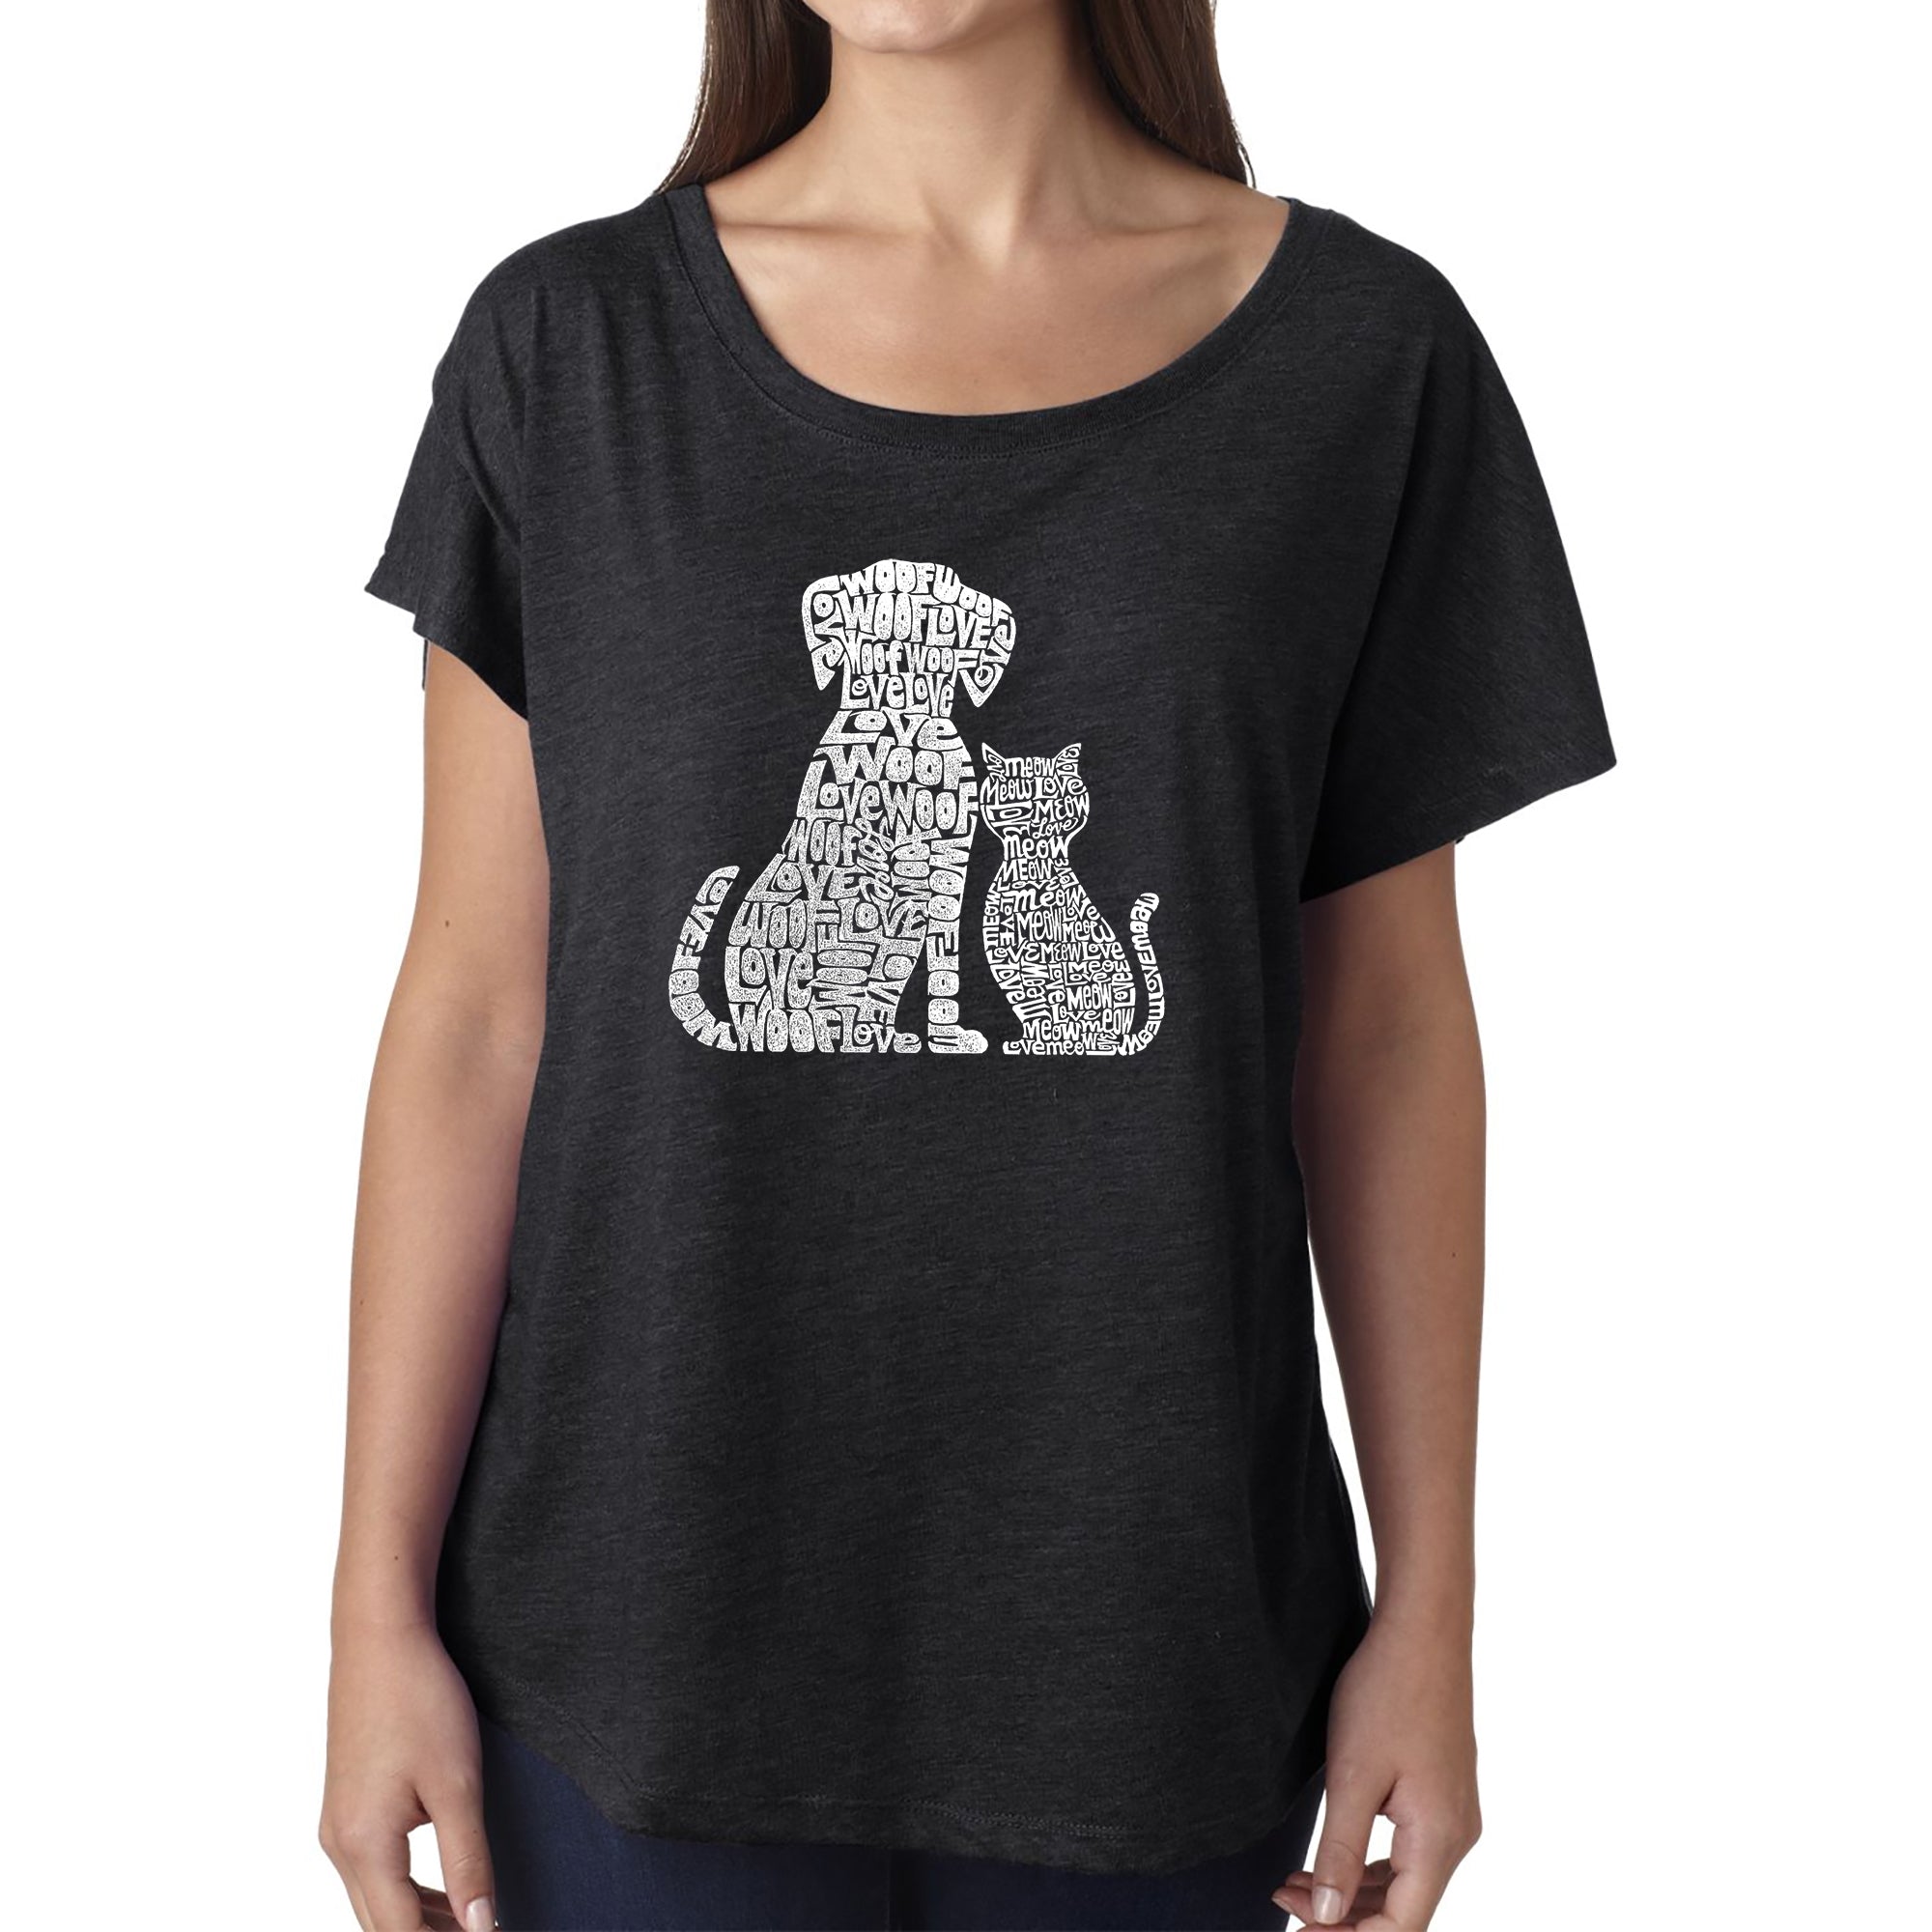 Dogs And Cats - Women's Loose Fit Dolman Cut Word Art Shirt - Black - Medium